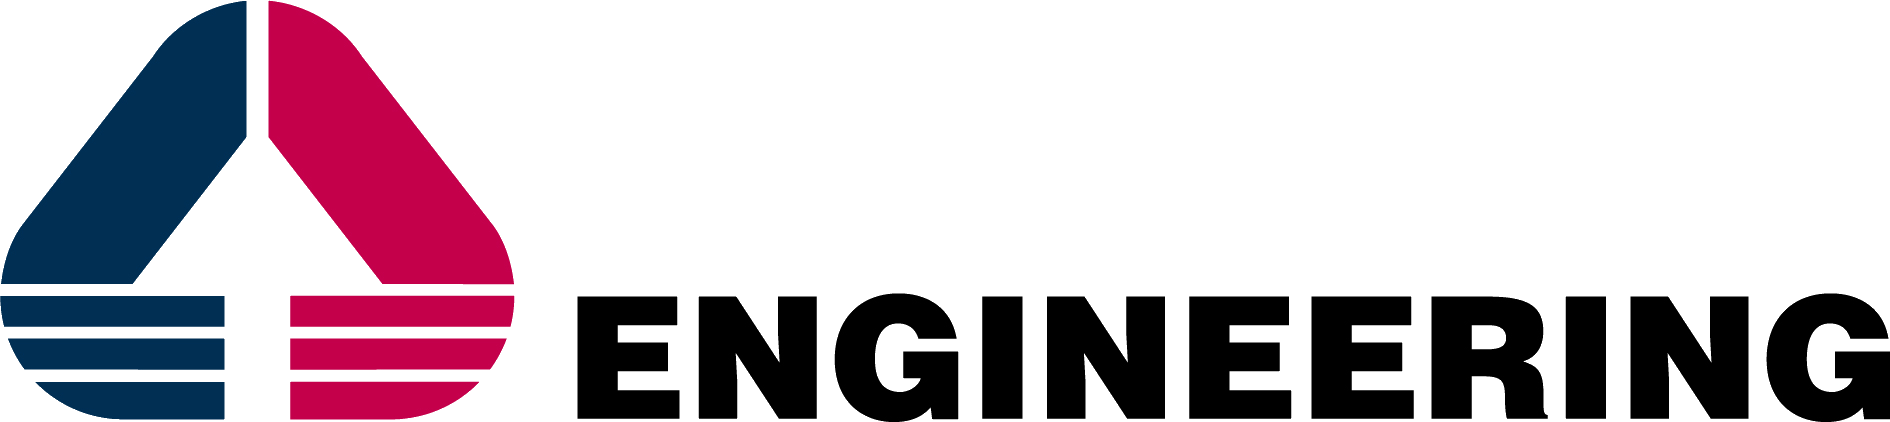 Engineering SpA logo